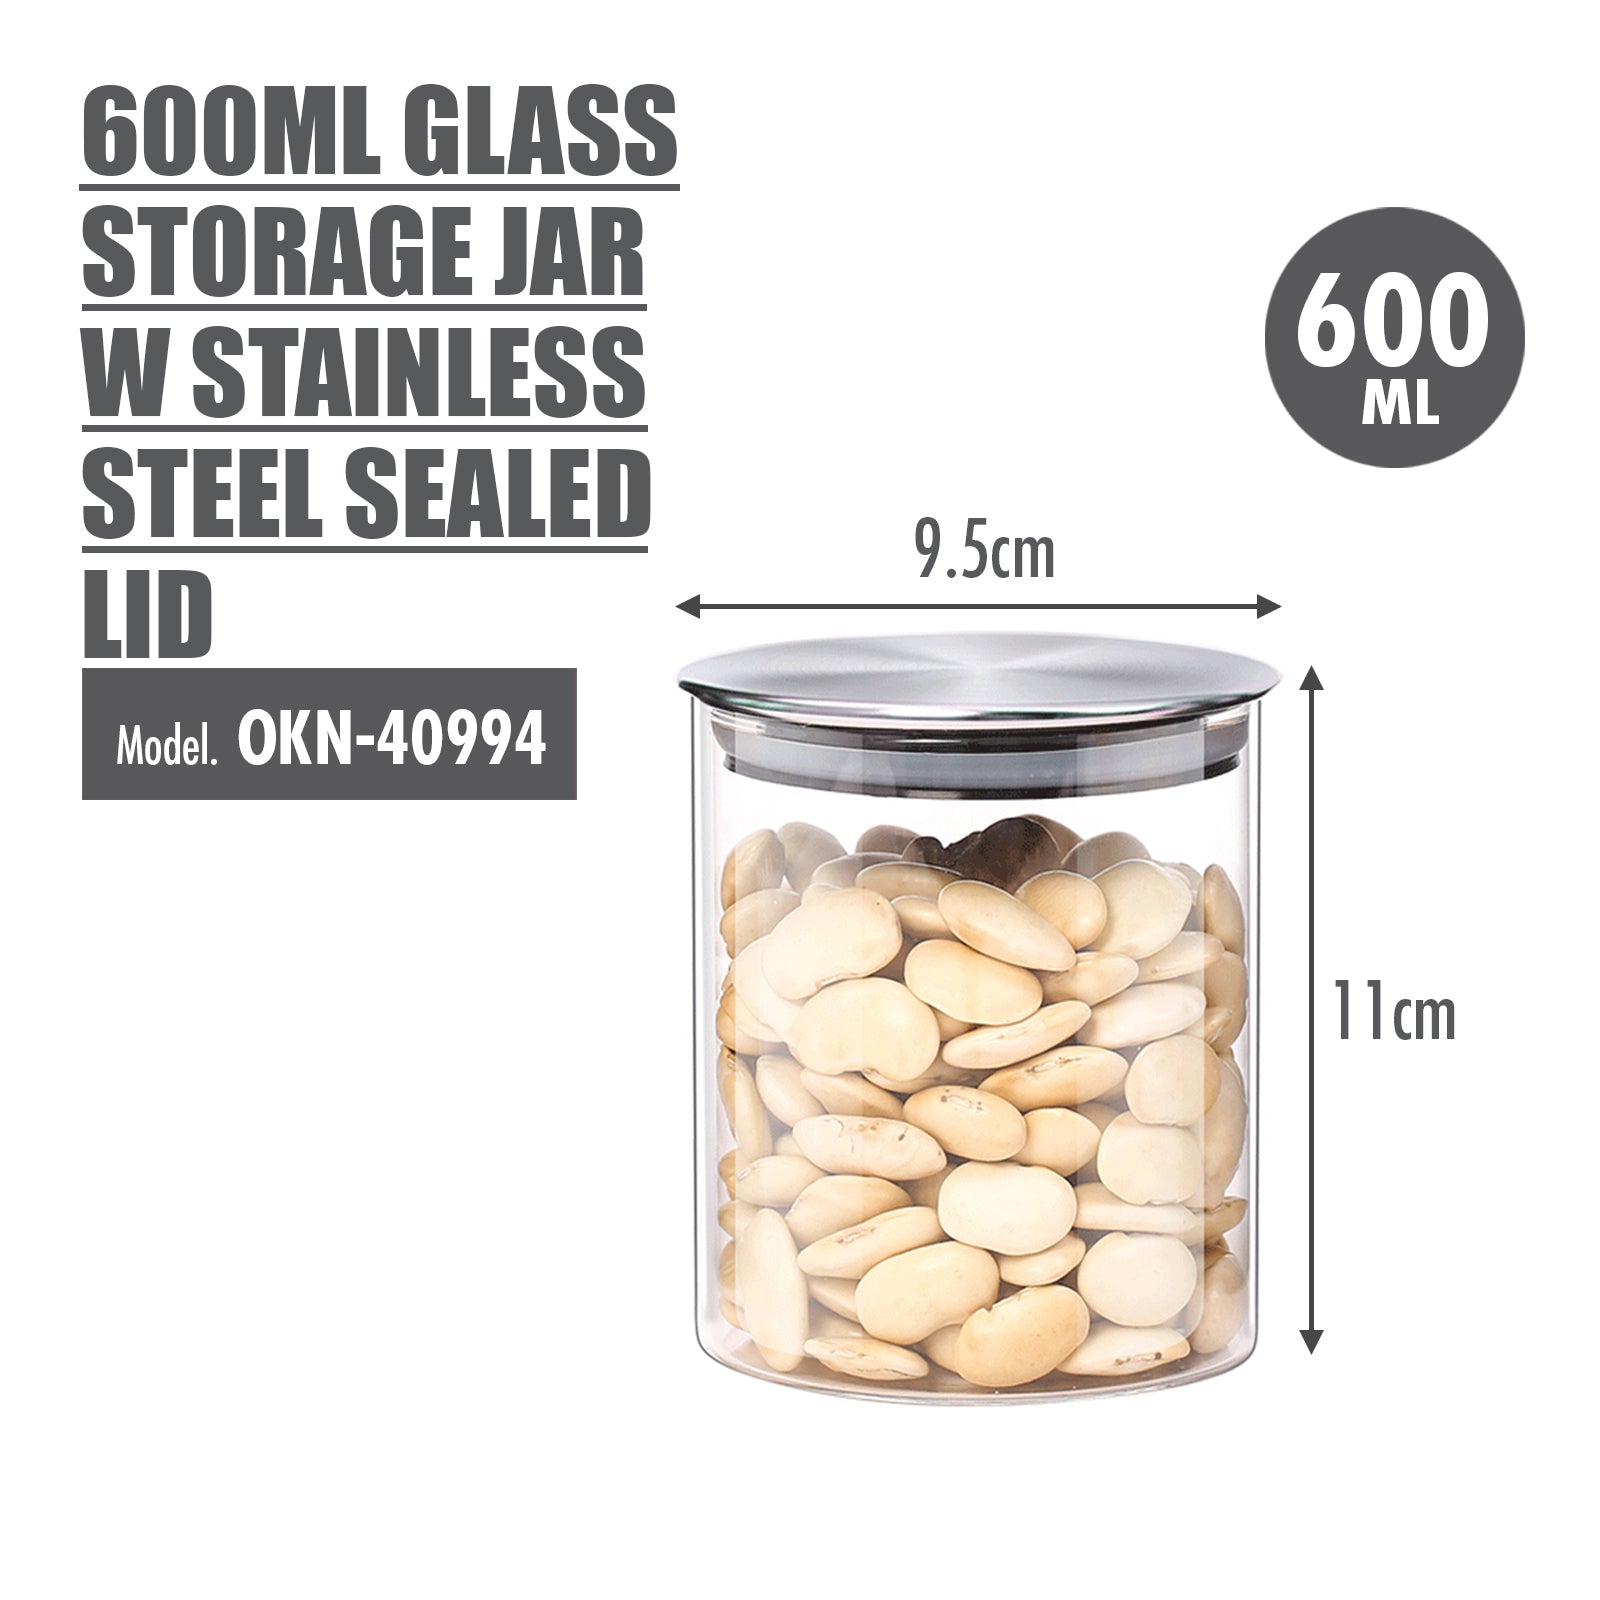 600ml Glass Storage Jar with Stainless Steel Sealed Lid (Dia: 9.5cm)